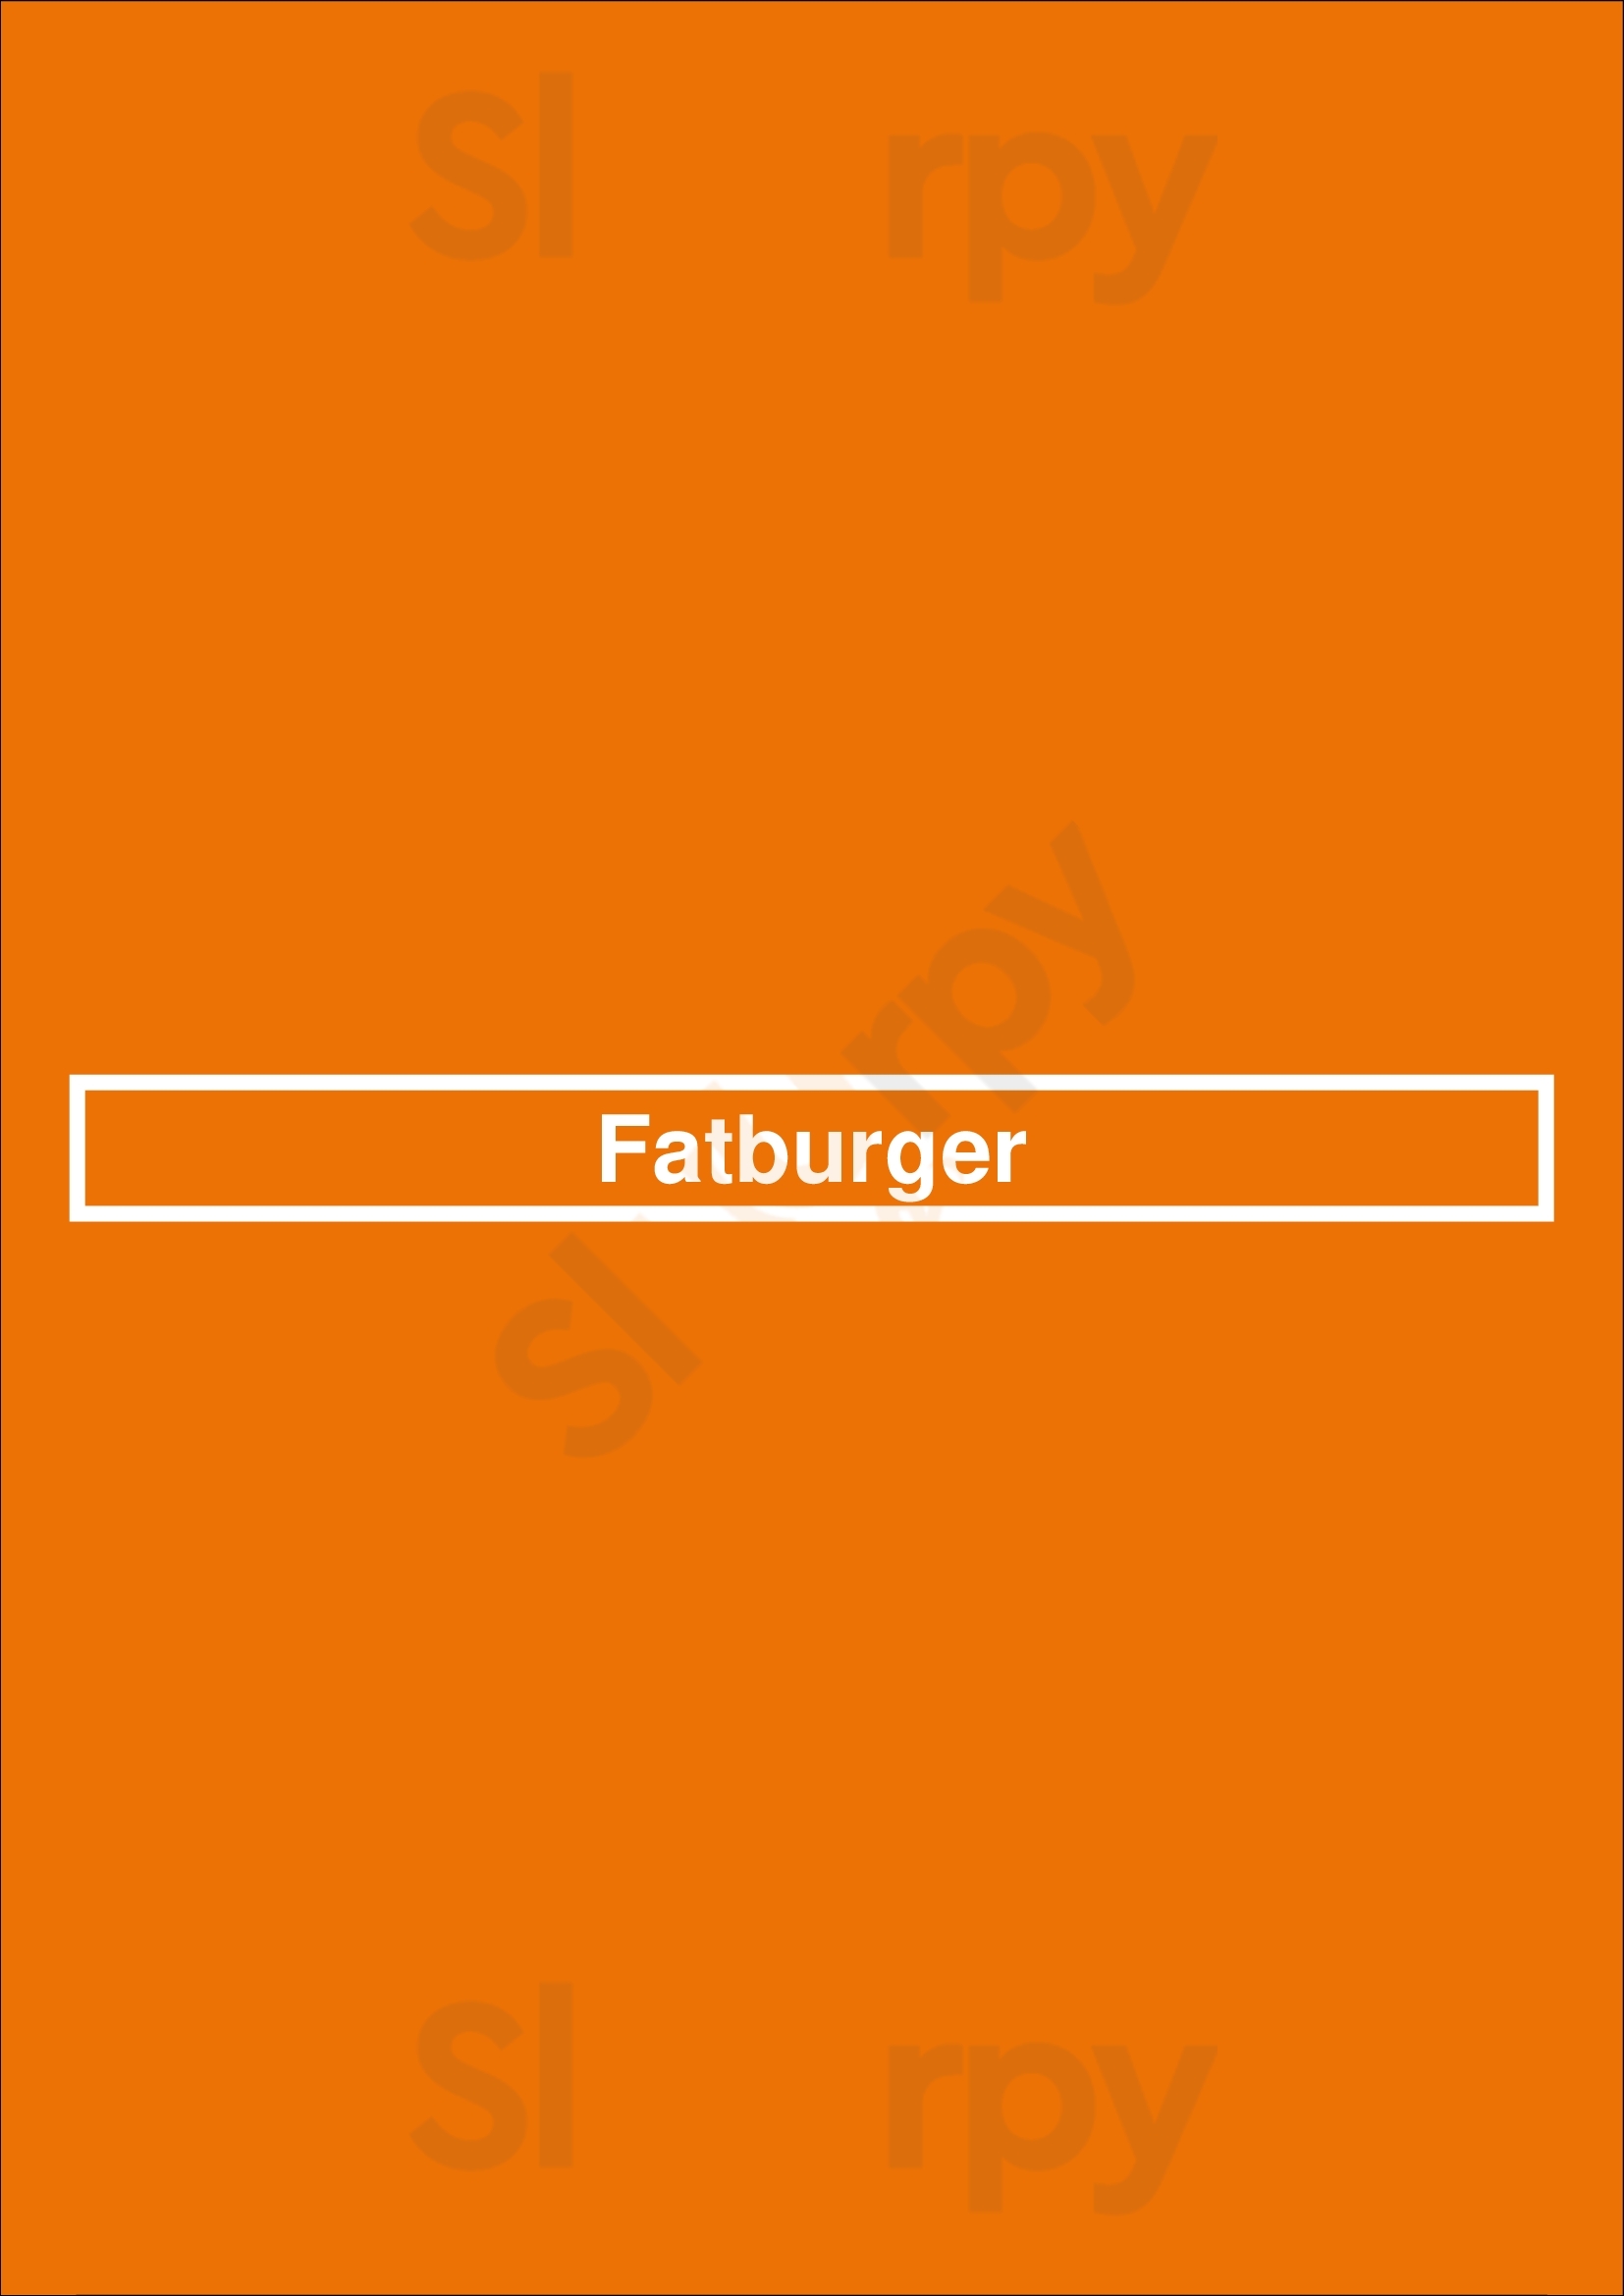 Fatburger Las Vegas Menu - 1